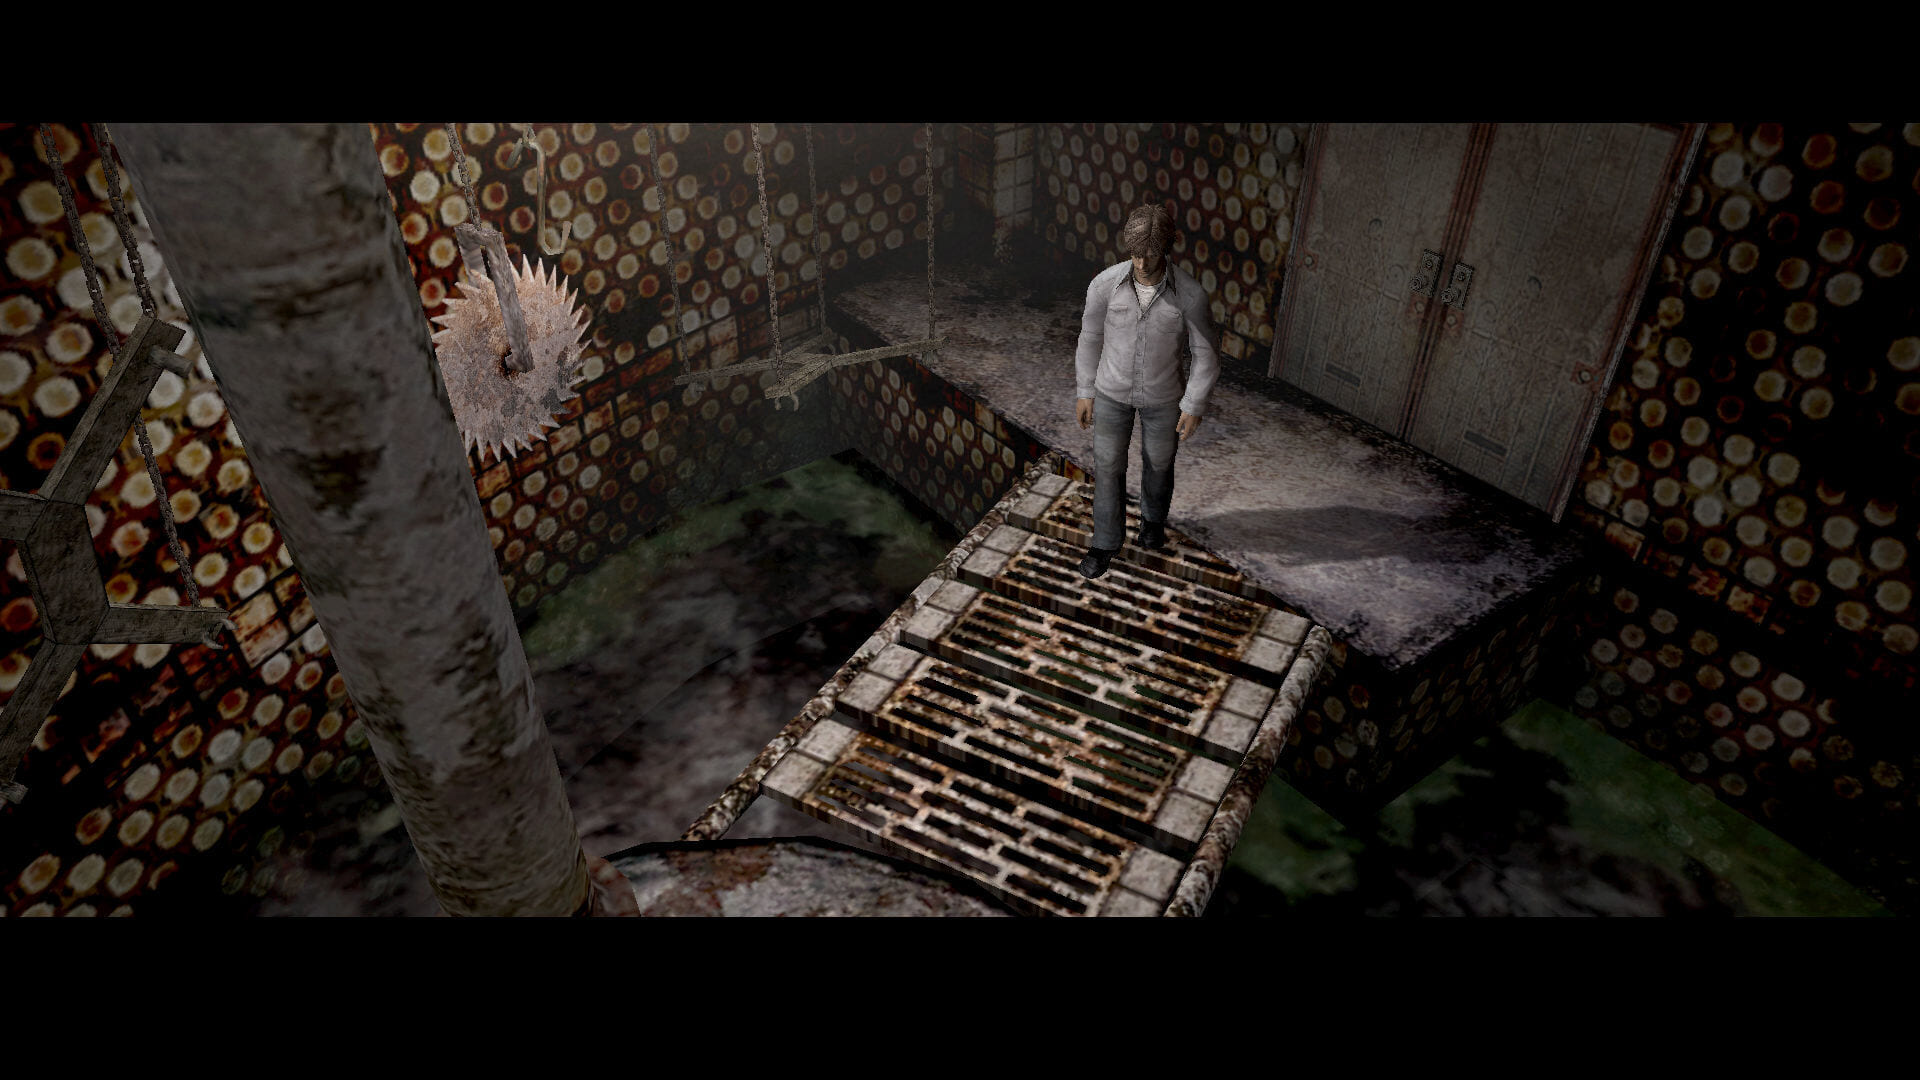 Silent Hill 4 – Resurrection Games